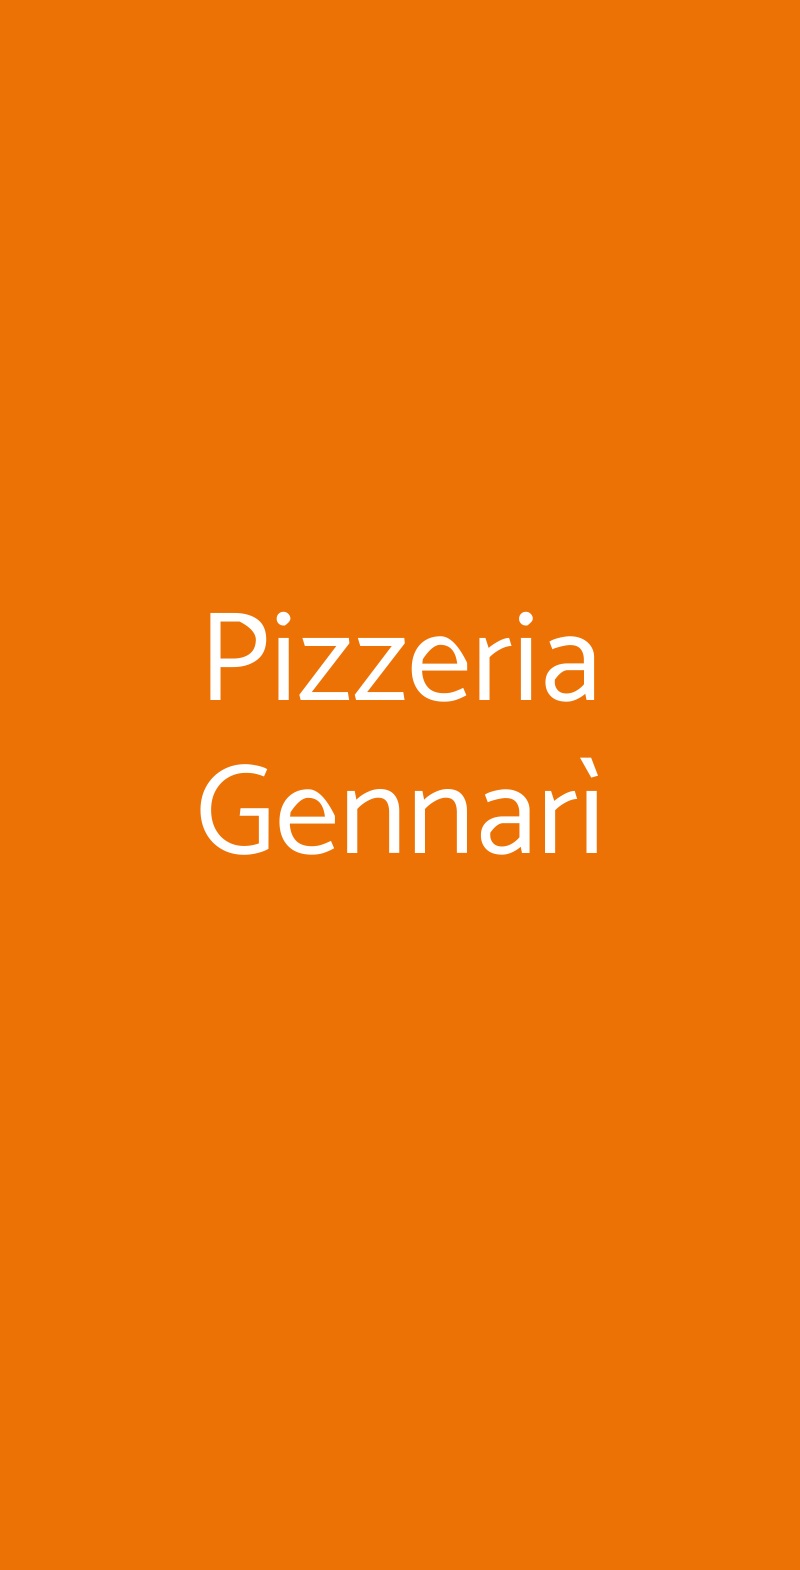 Pizzeria Gennarì Milano menù 1 pagina